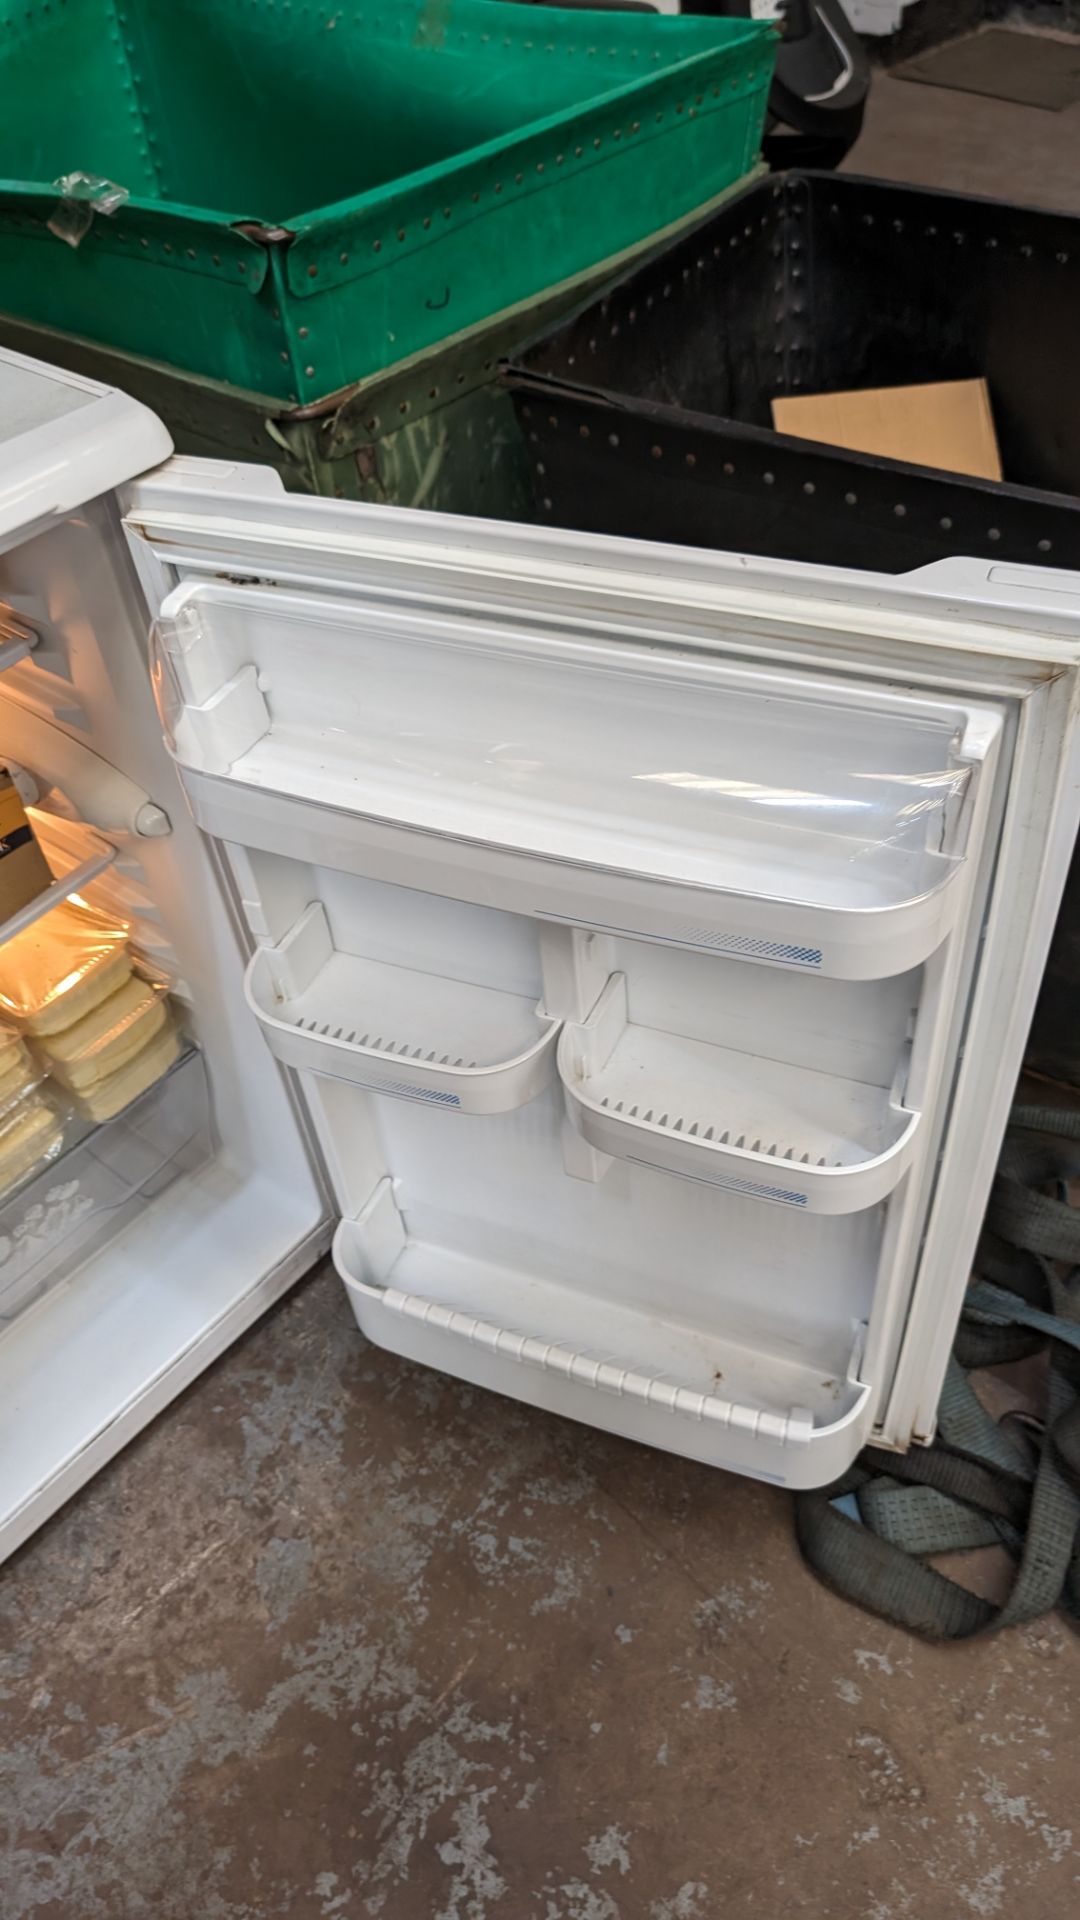 Beko undercounter domestic fridge - Image 5 of 5